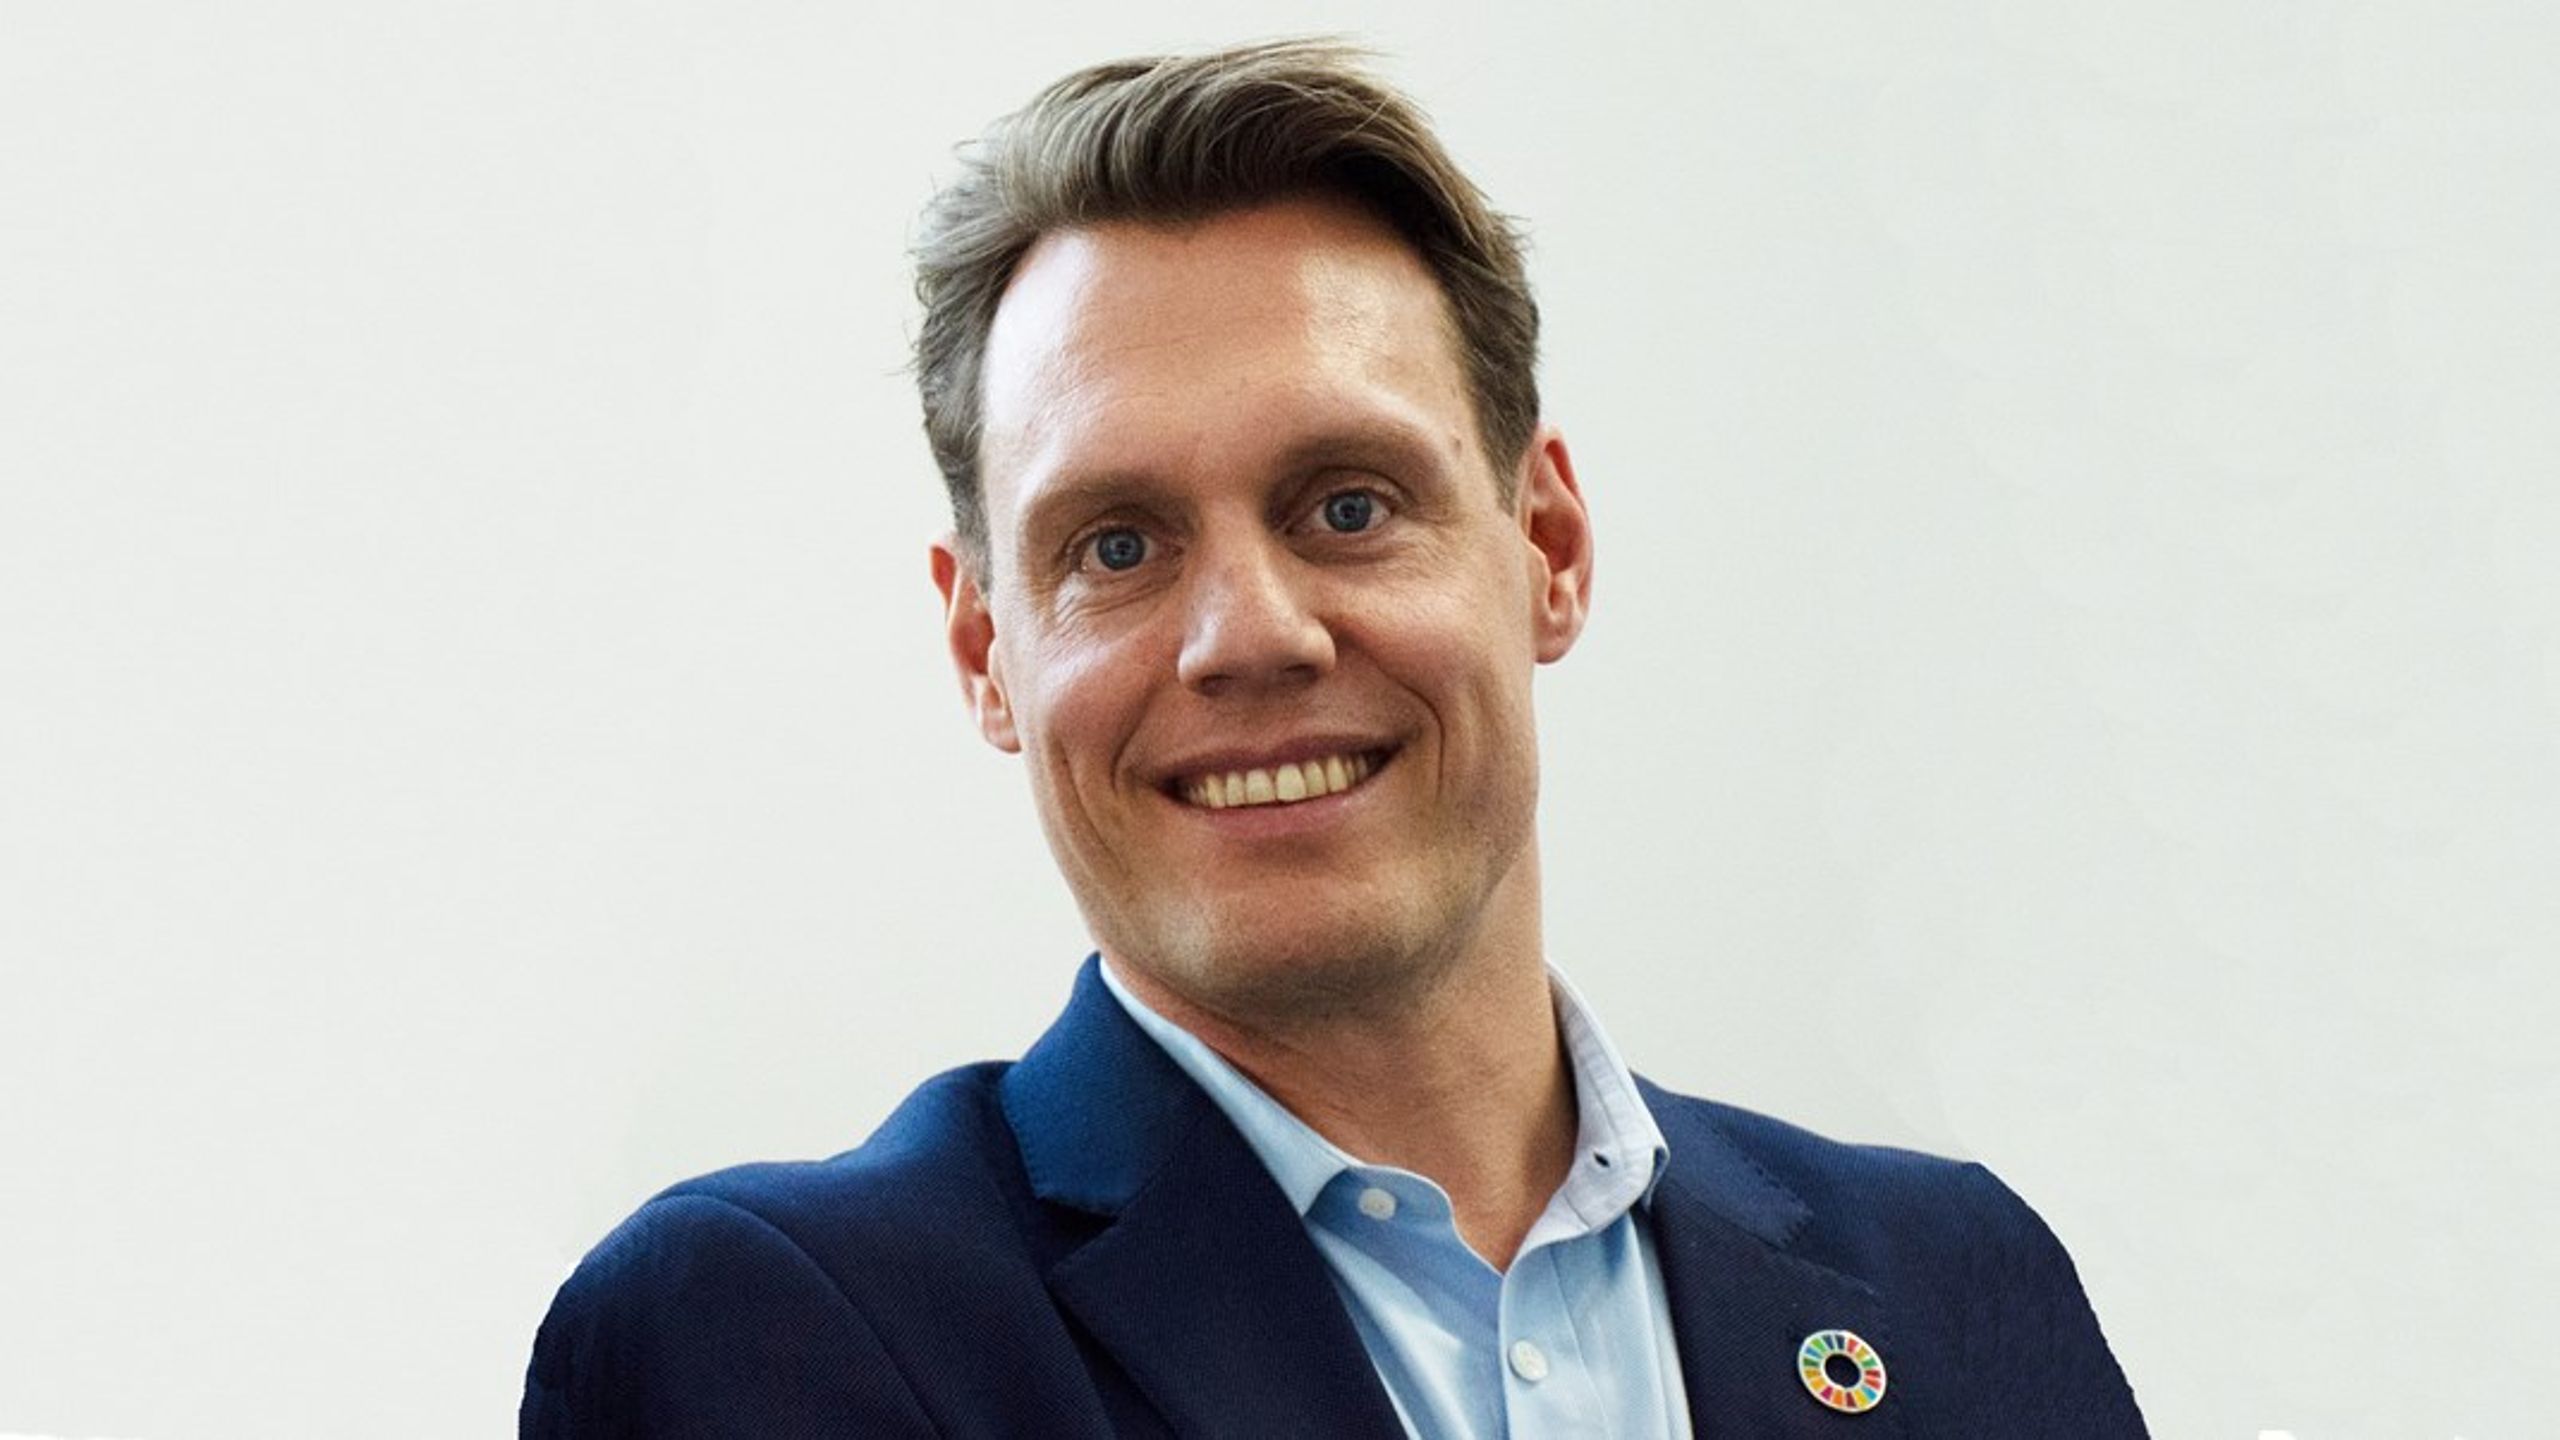 "Vi kan lige så godt forberede os på
fremtiden og tænke digitalisering og bæredygtighed sammen," mener
Kristoffer Nilaus Tarp,&nbsp;chef for Sustainability Practice Nordic Region,
NTT DATA Business Solutions.